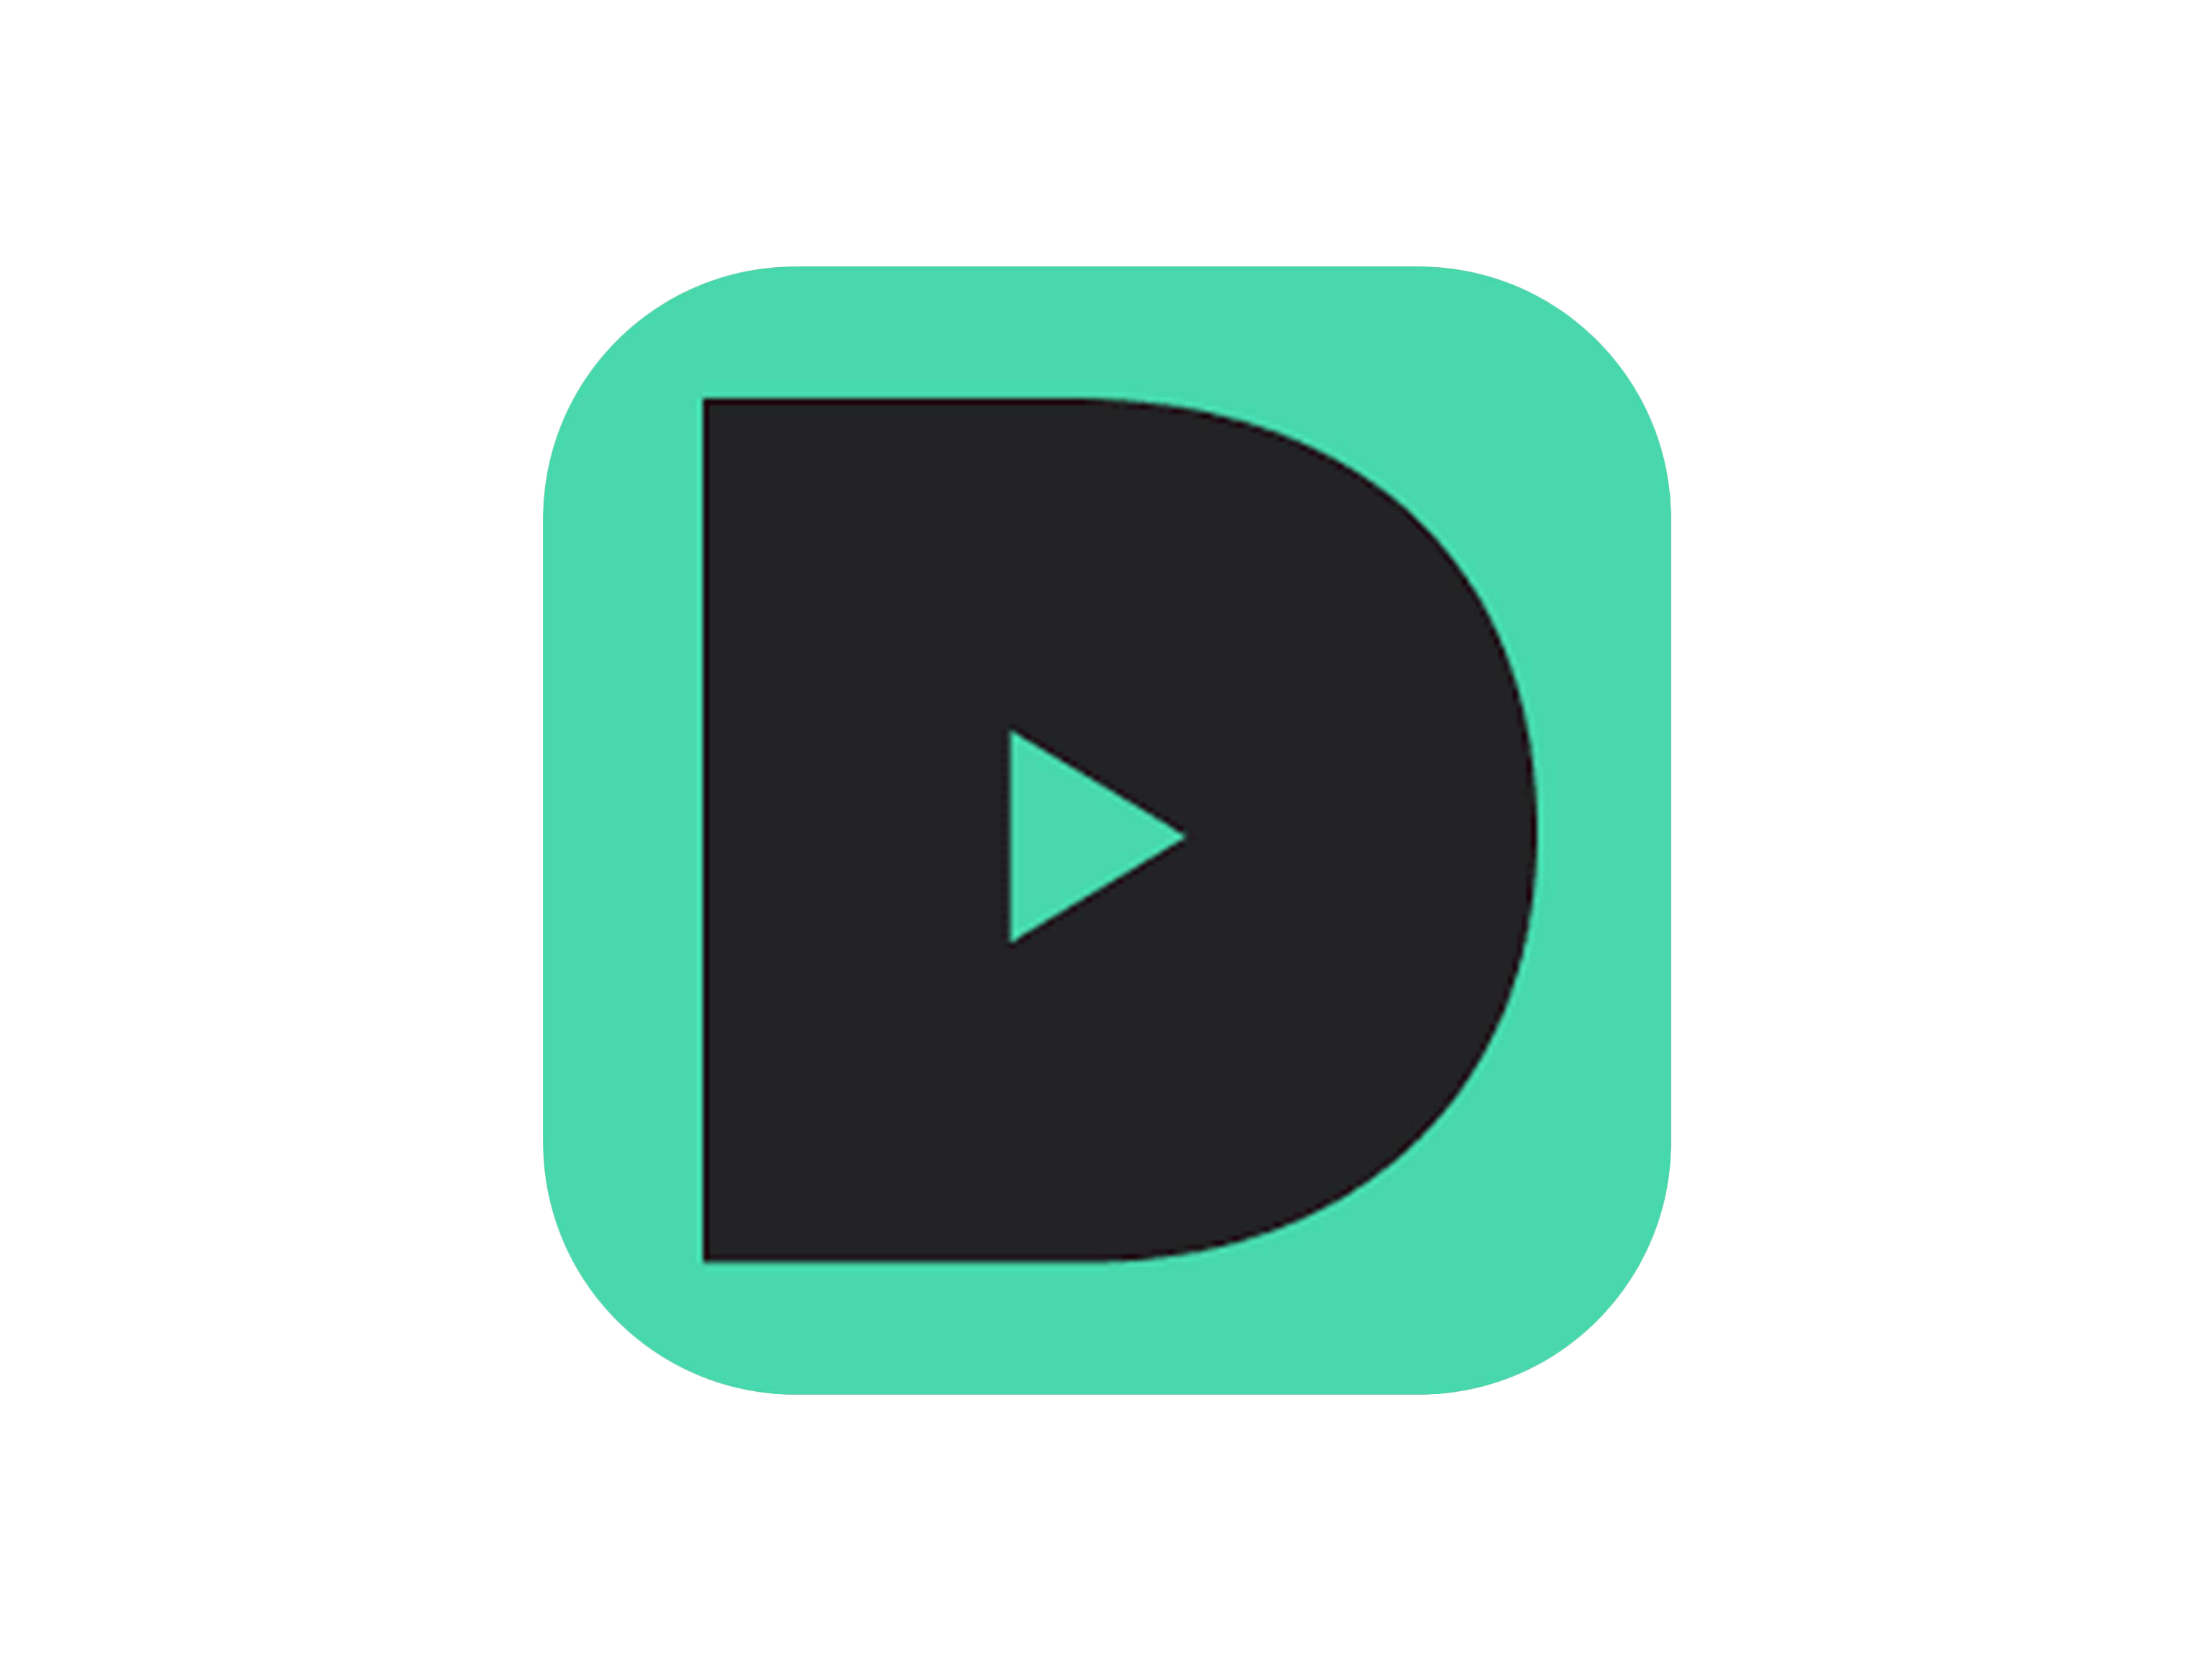 Dash Radio App Logo